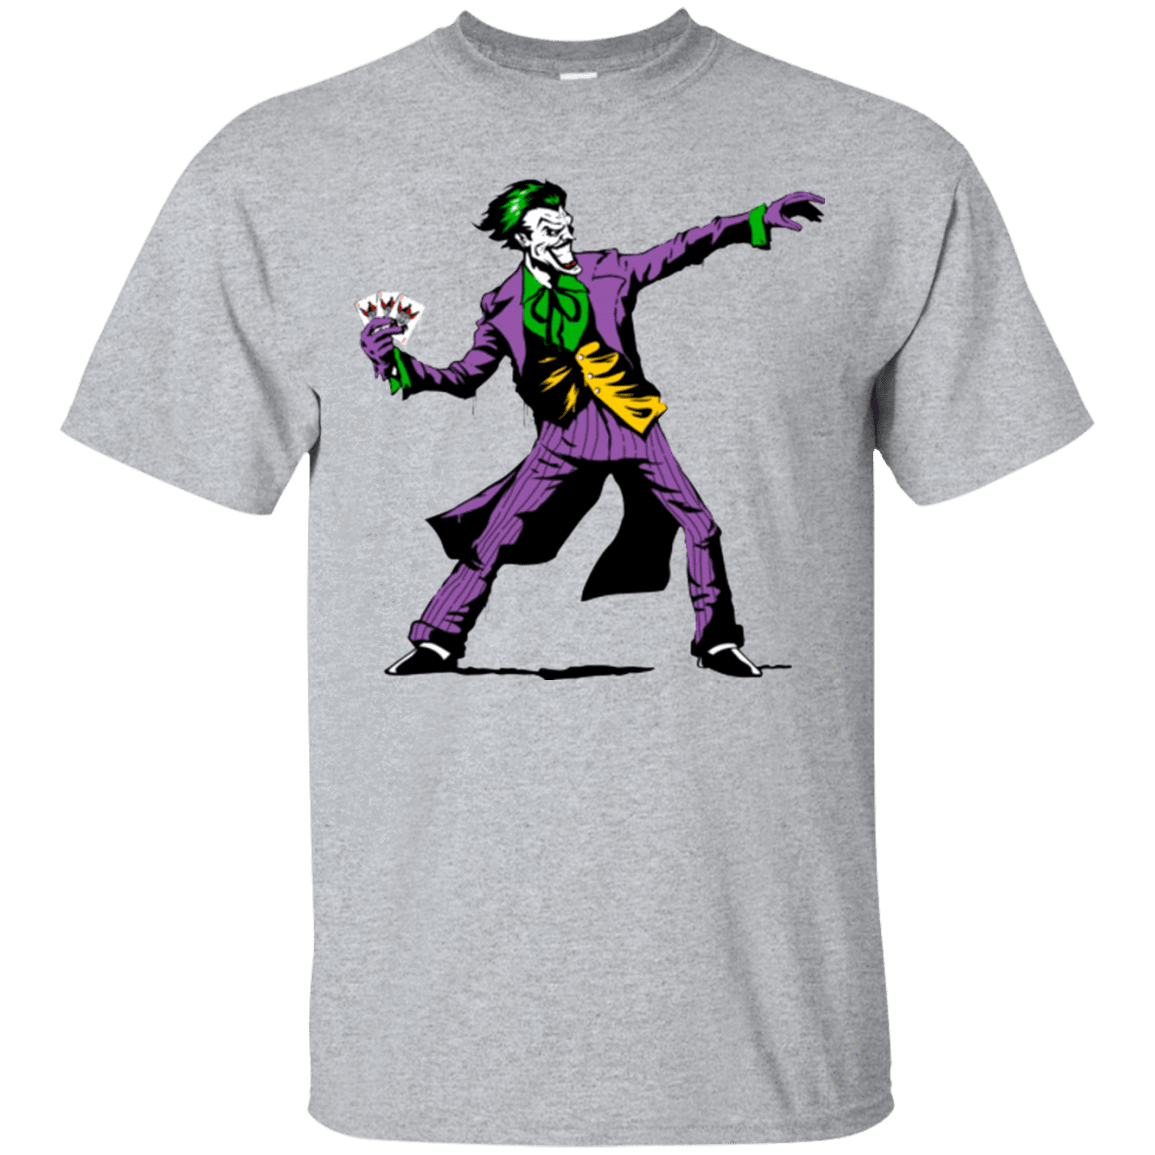 T-Shirts Sport Grey / Small Crime Clown Banksy T-Shirt